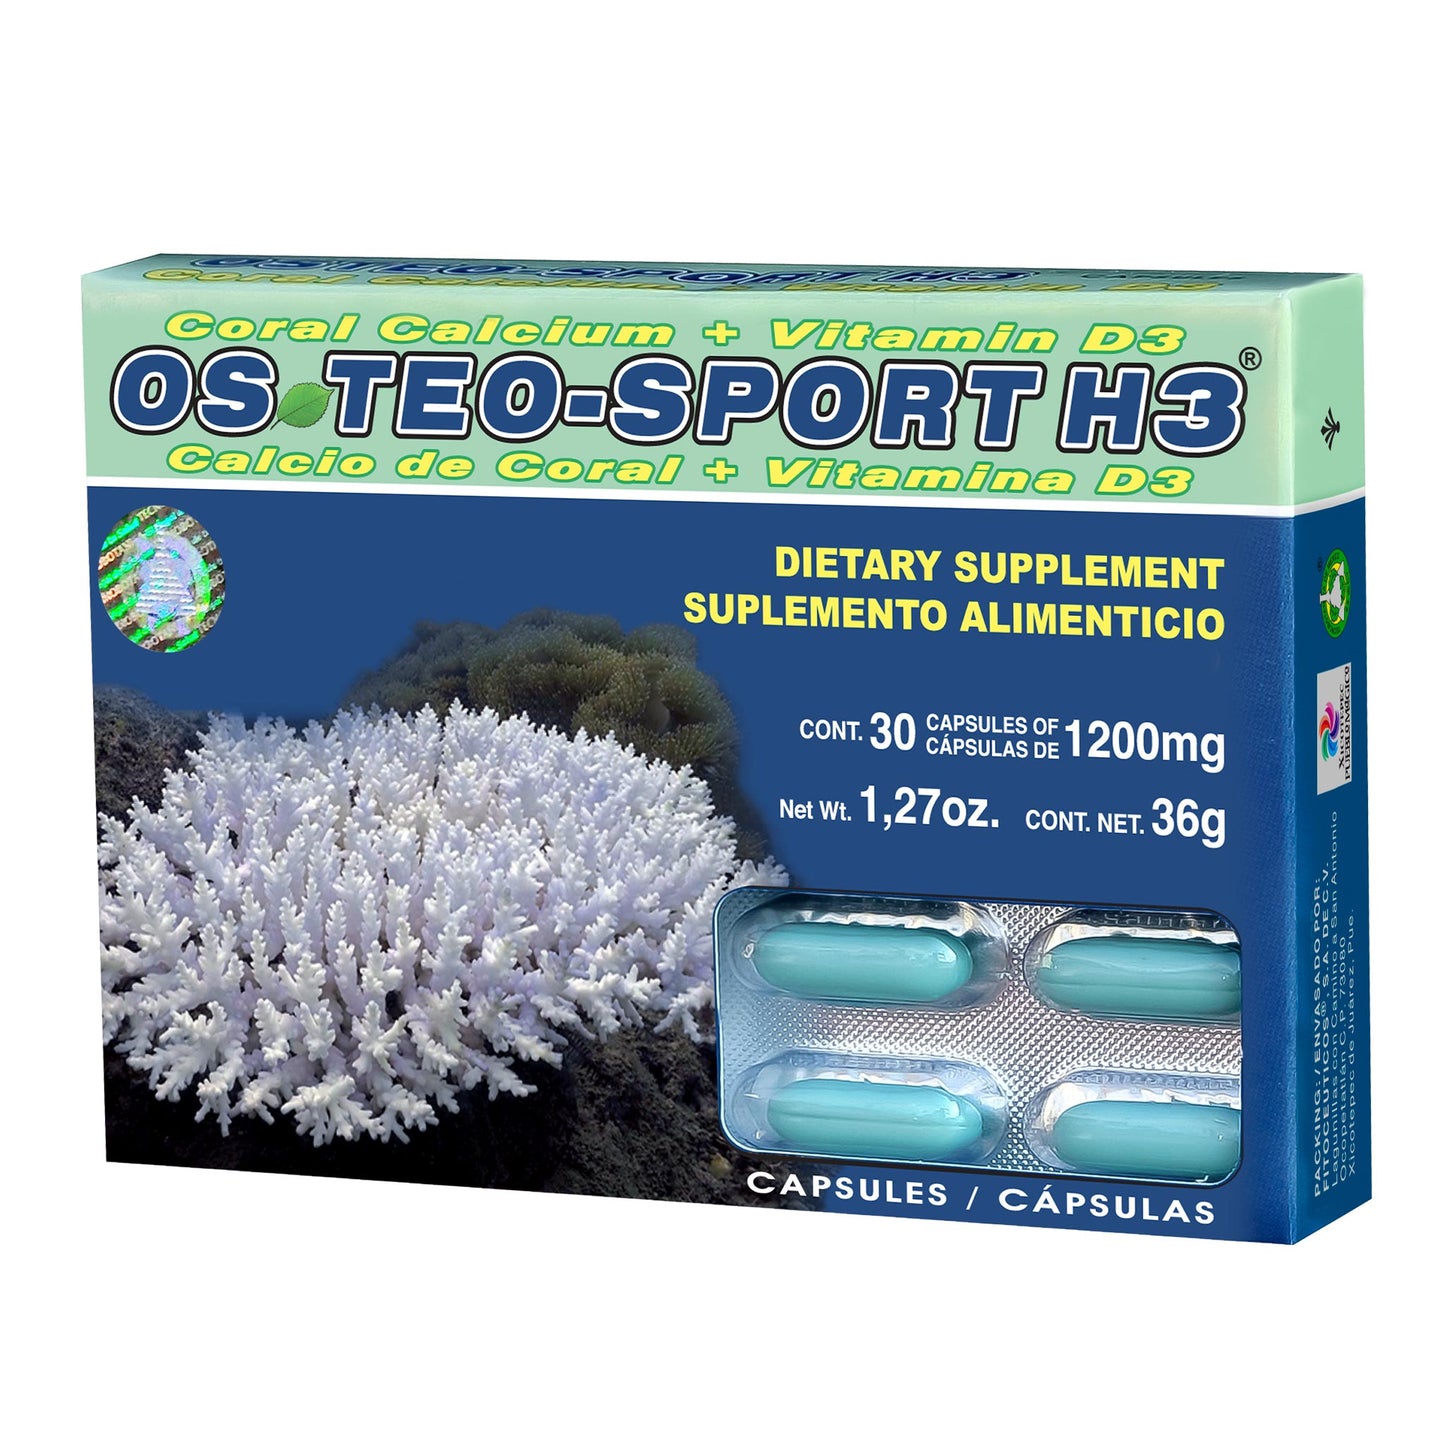 OSTEO-SPORT H3 ® 30 cápsulas